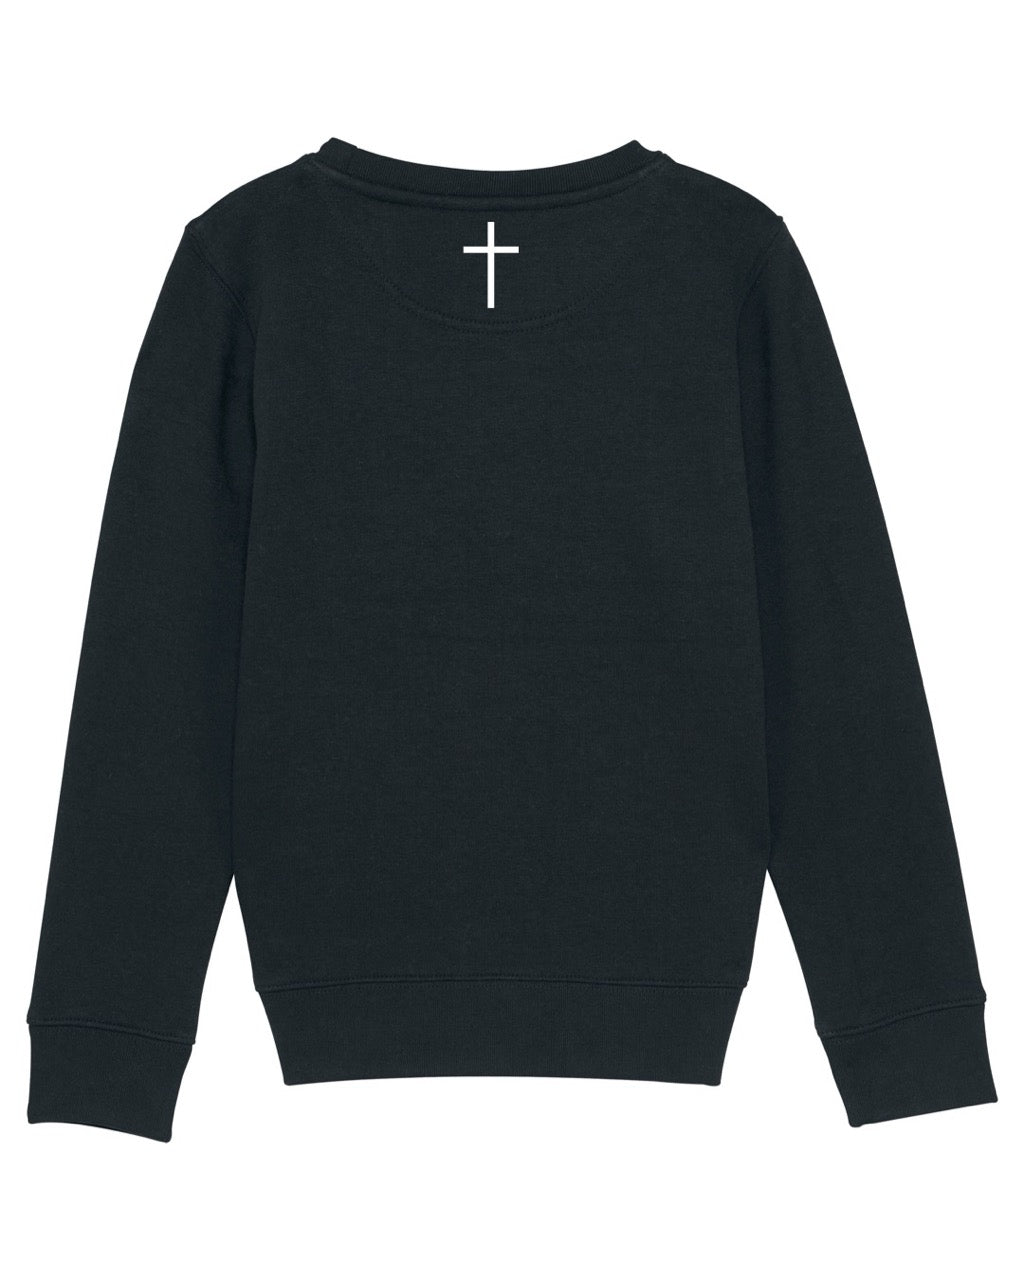 Essential Kinder Sweatshirt - „Birth“